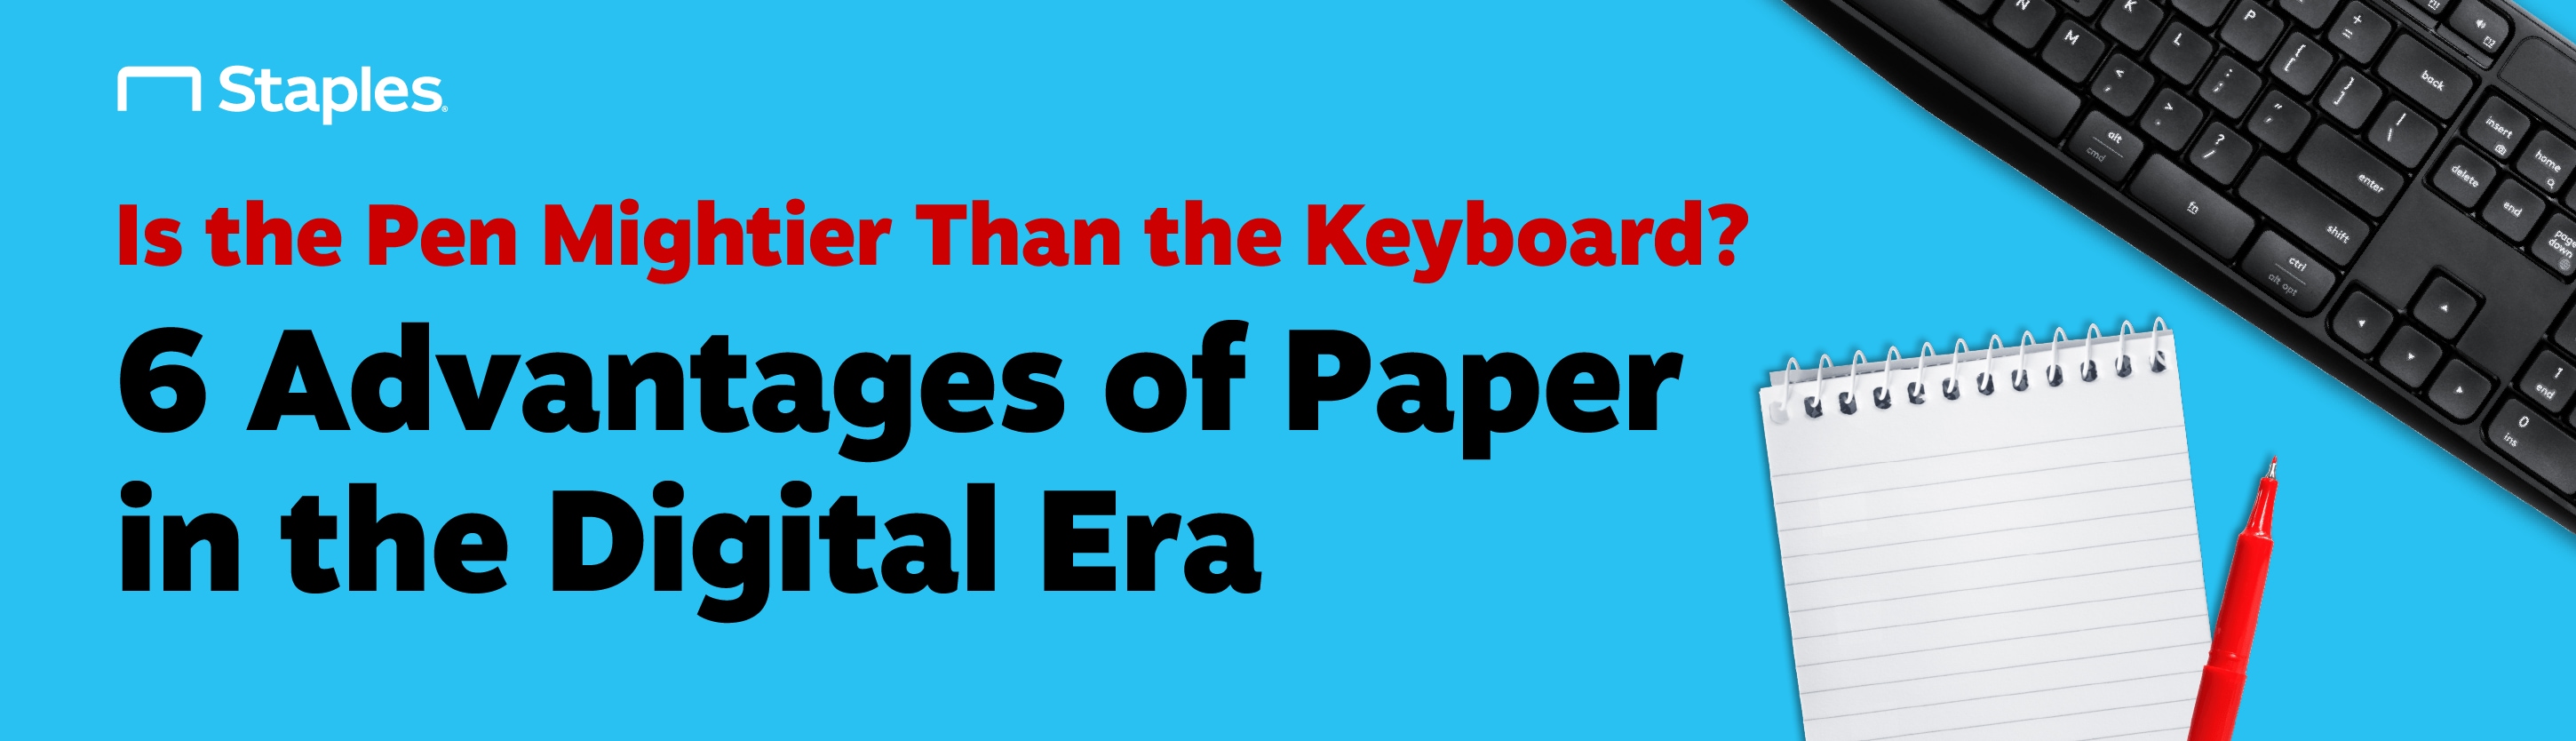 6 Advantages of Paper in the Digital Era